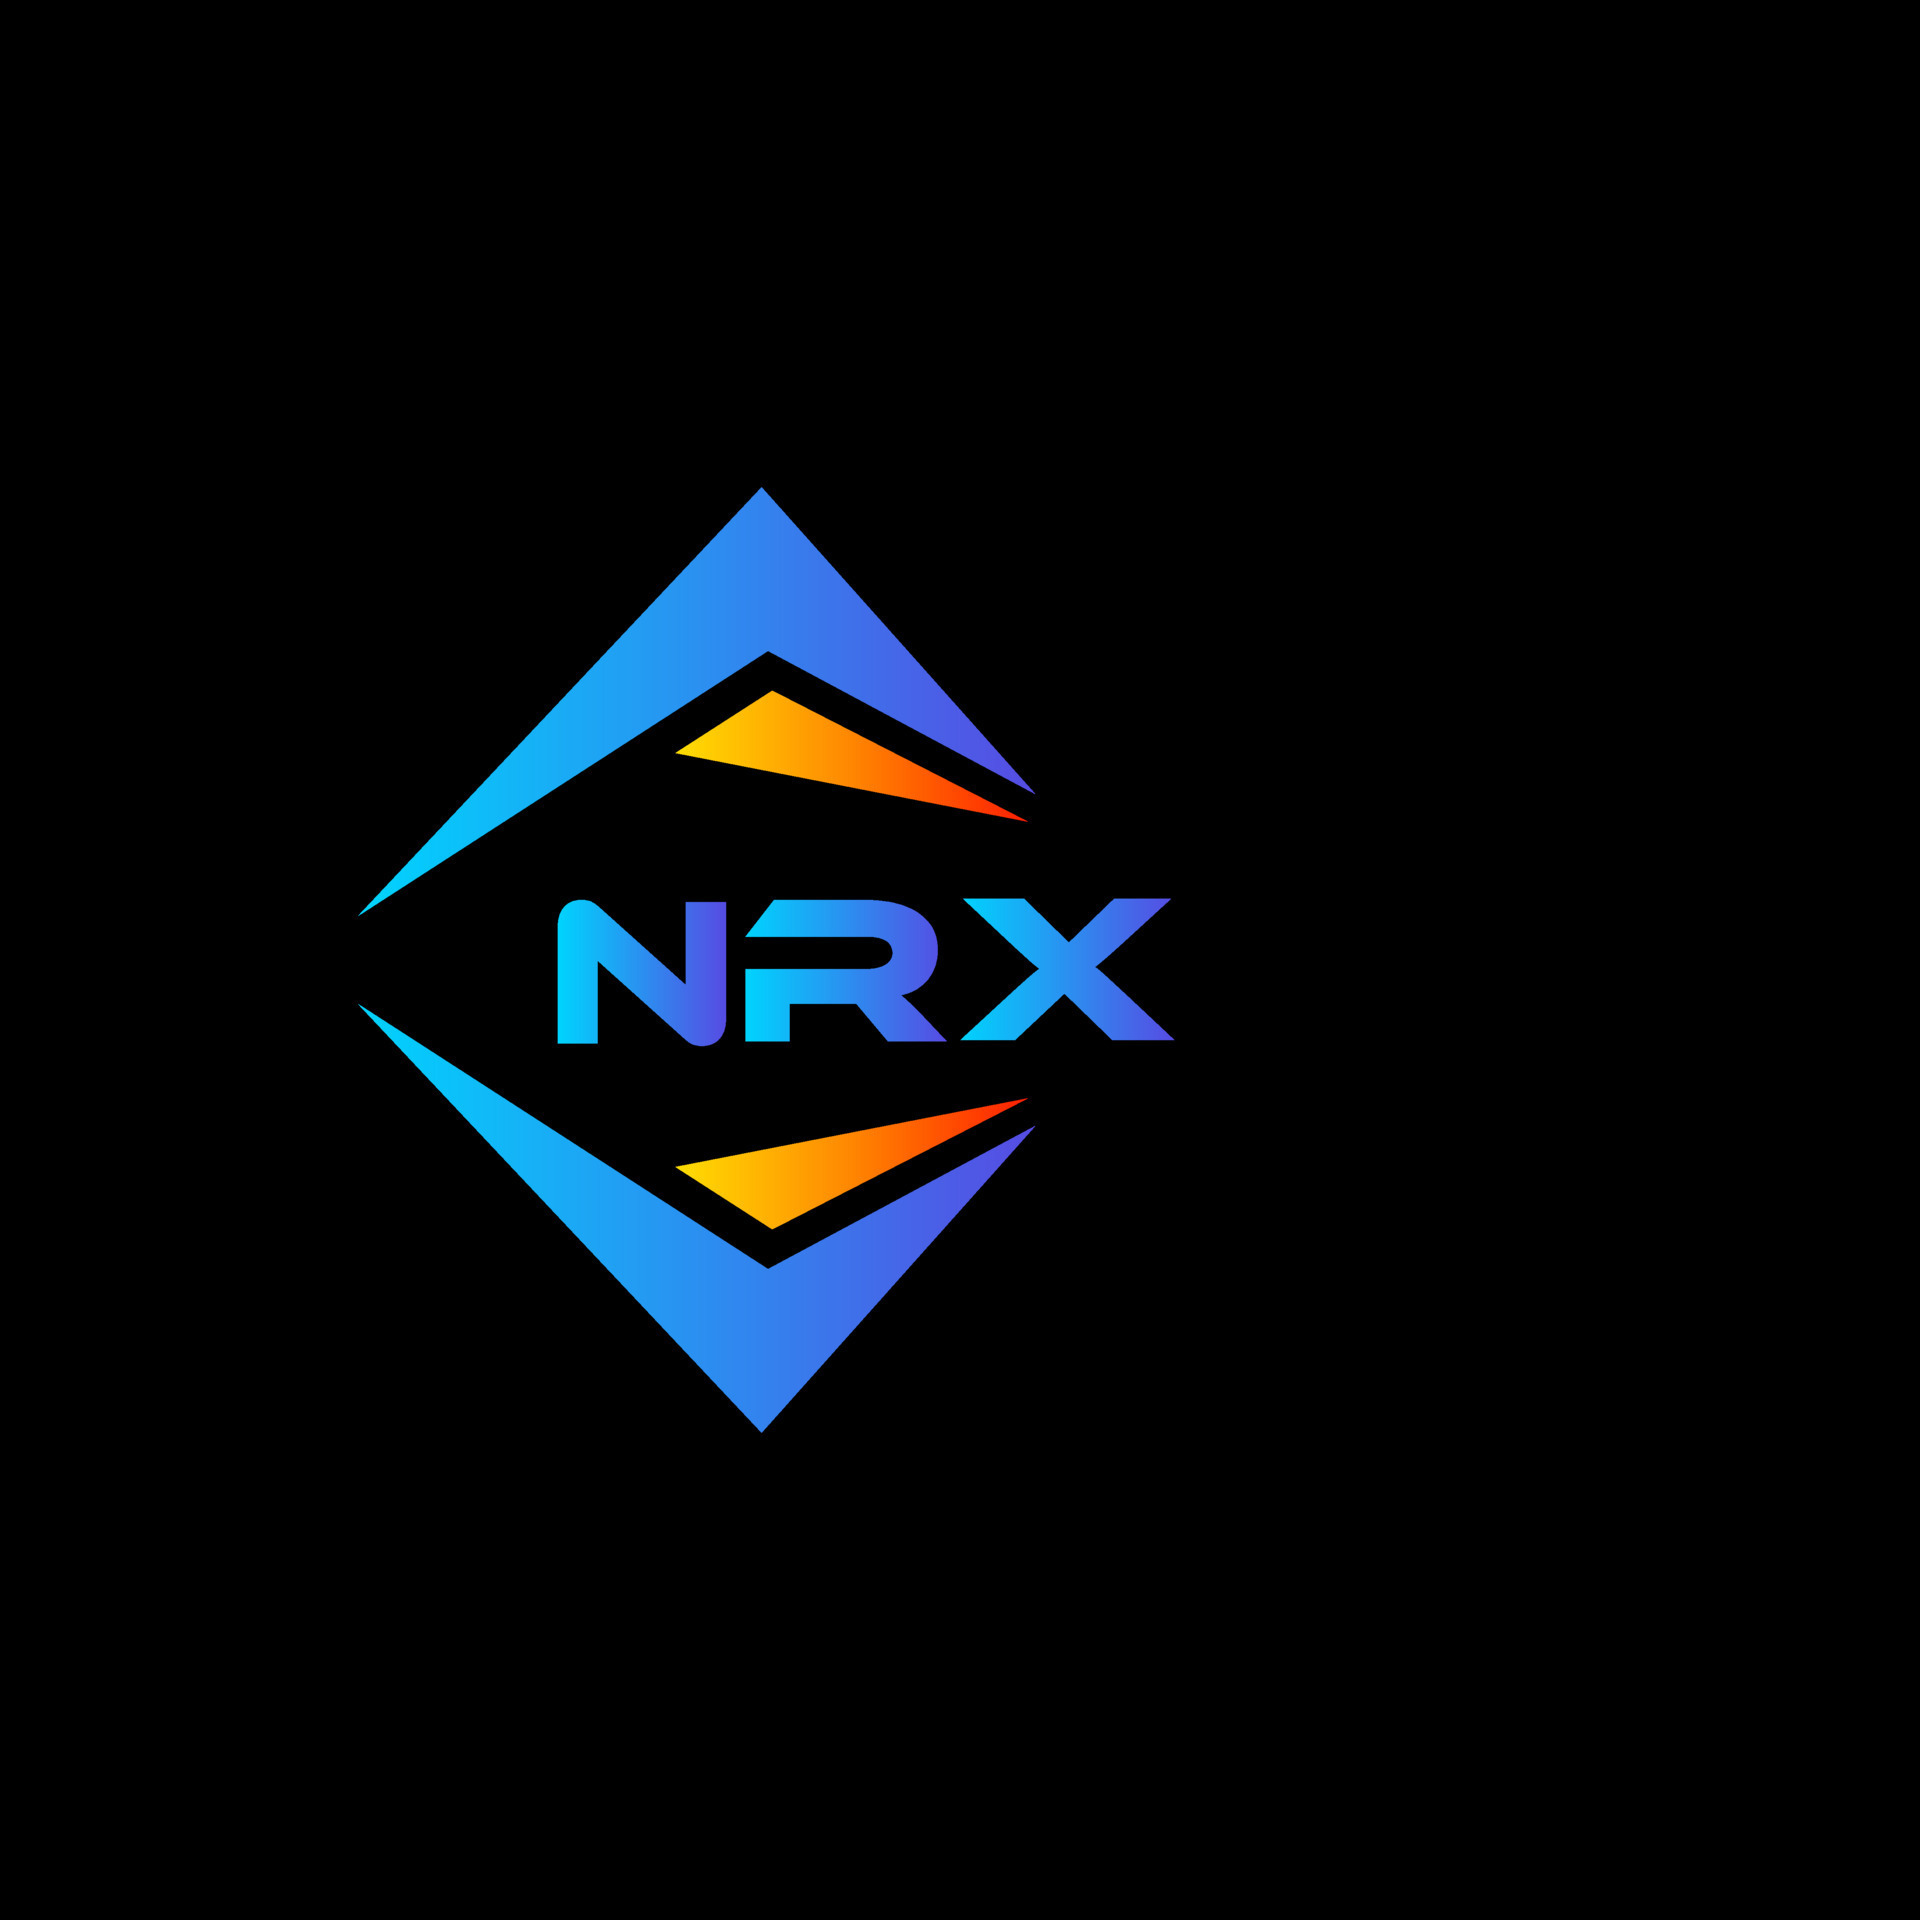 WebNRX abstract technology logo design on Black background. NRX